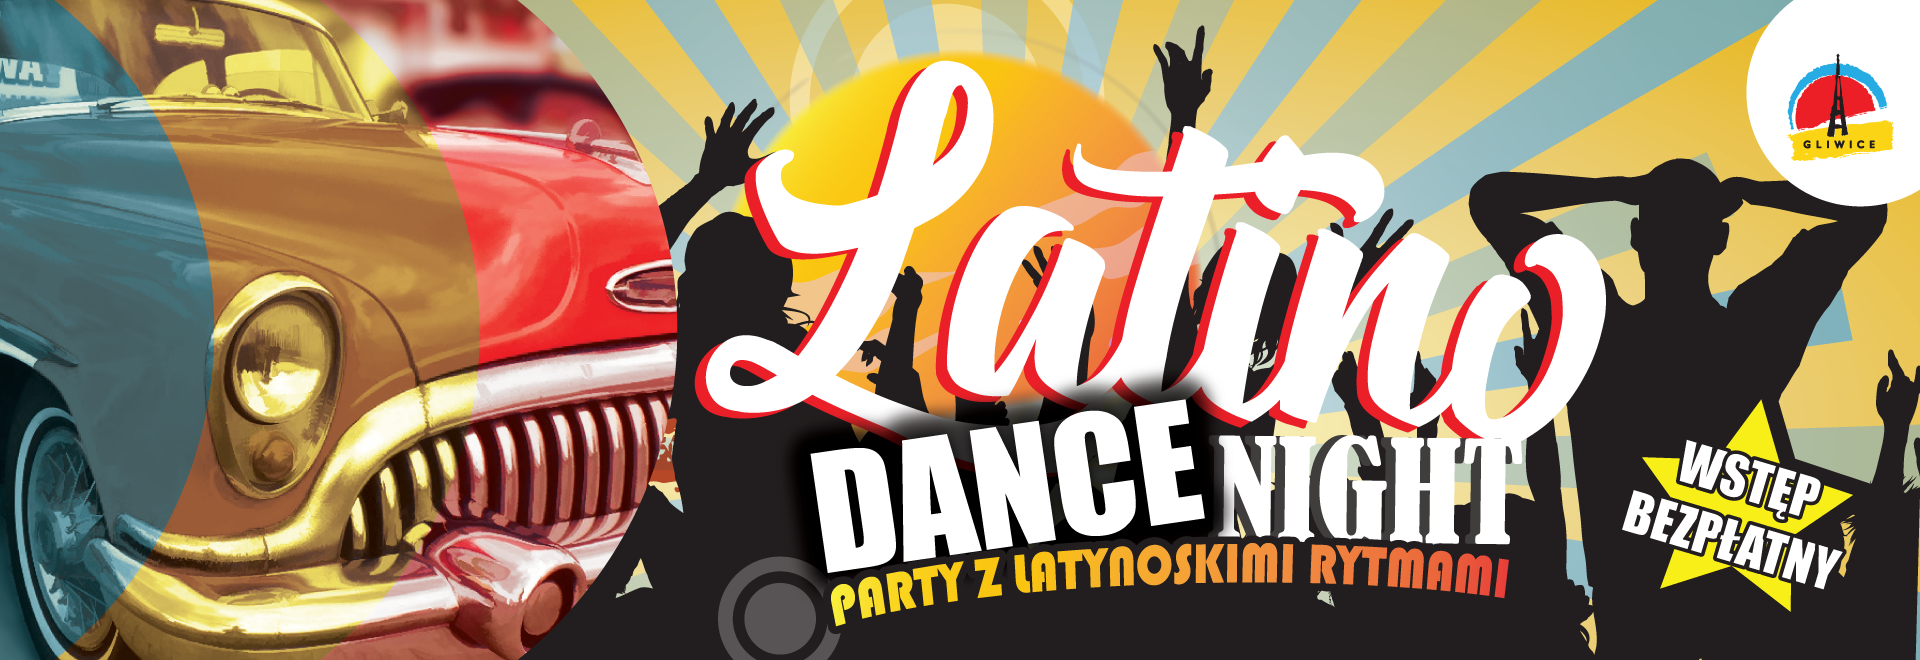 Latino Dance Night - impreza taneczna pod chmurką